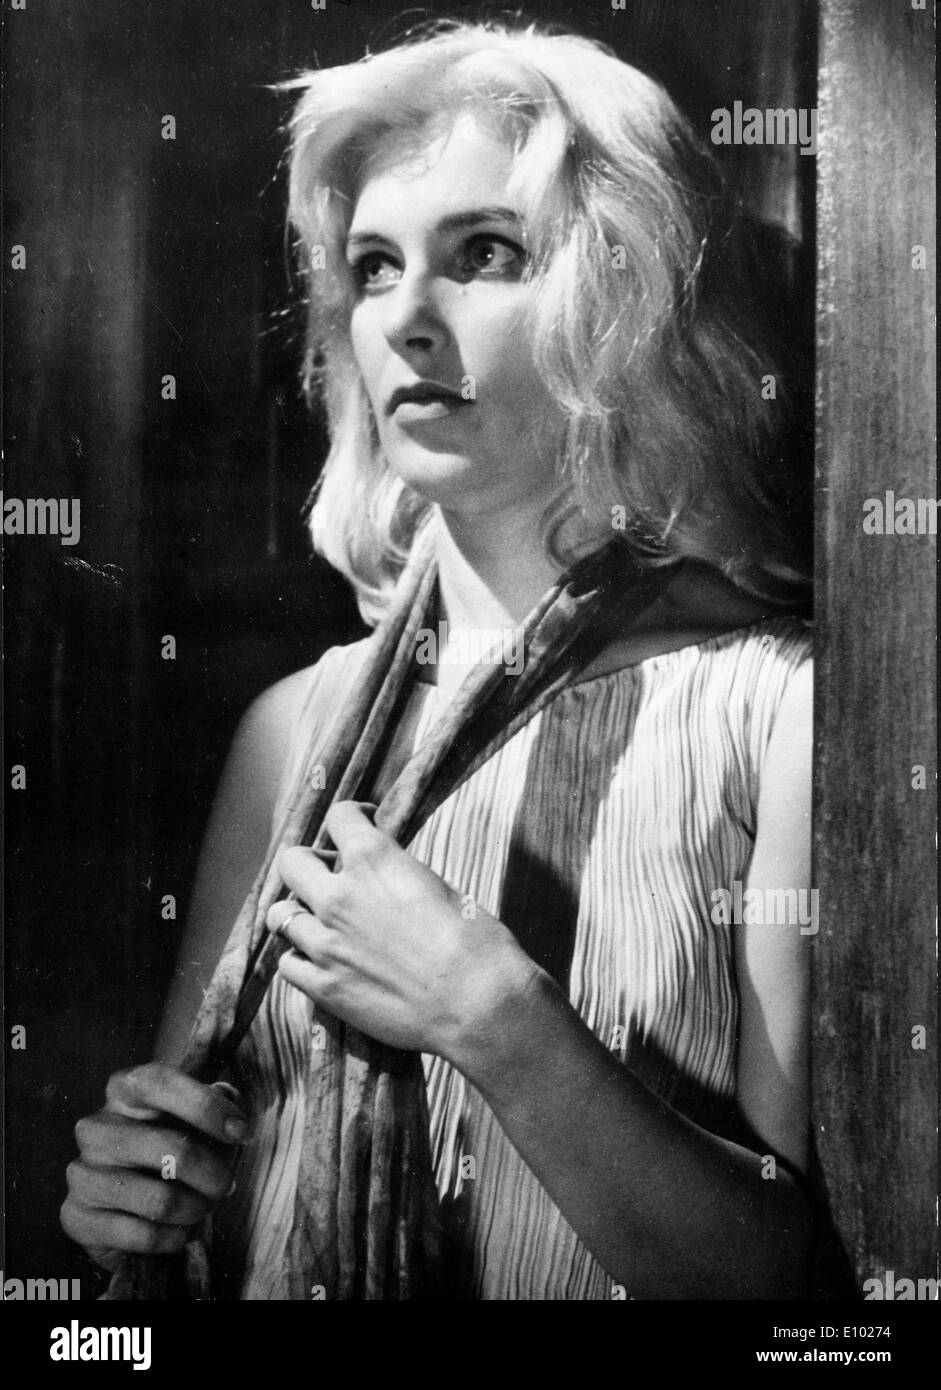 Actress Joanne Woodward in a film scene Stock Photo